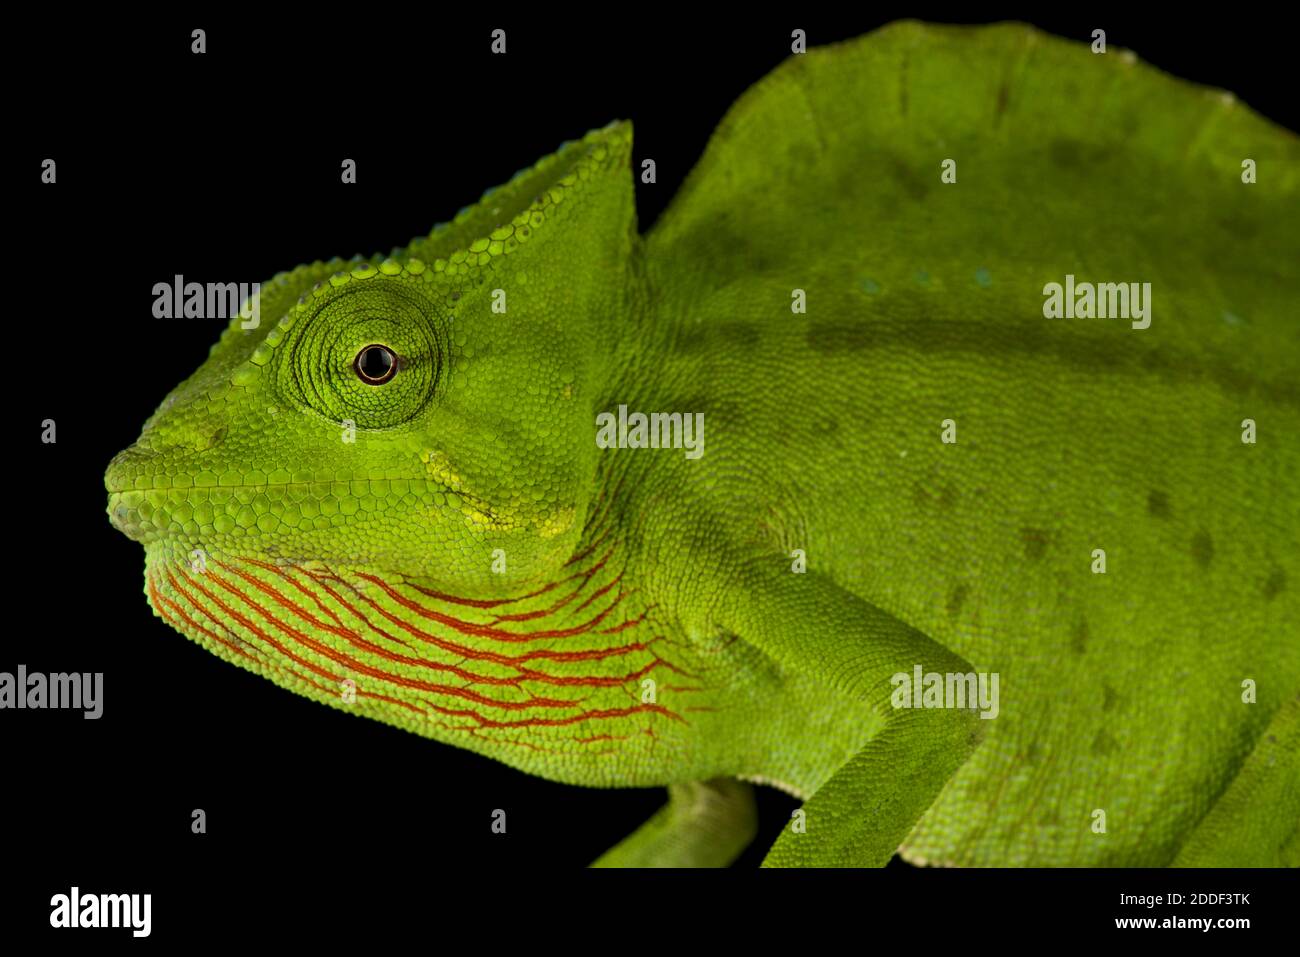 Crested chameleon (Trioceros cristatus) Stock Photo